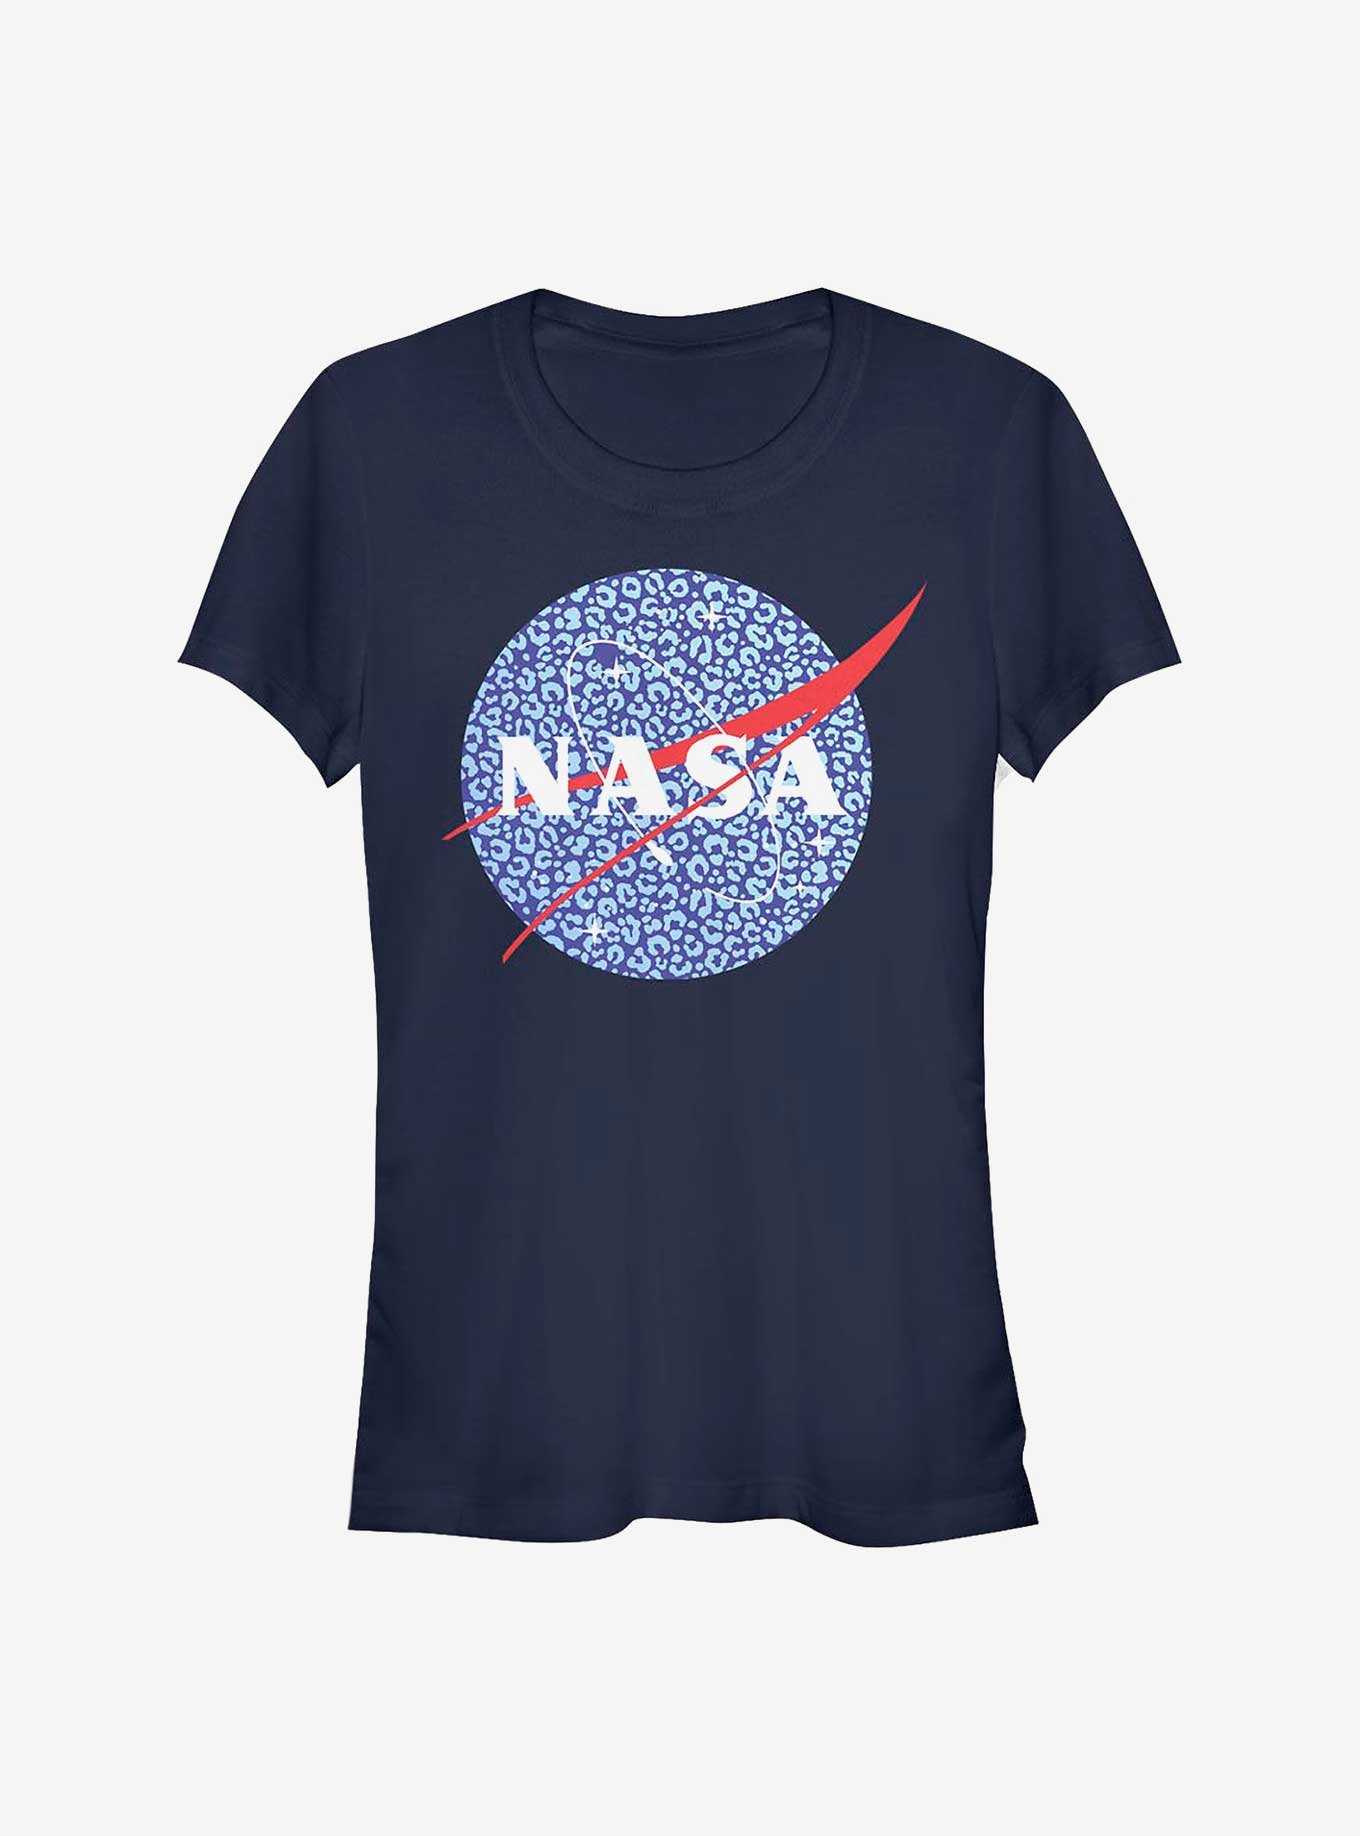 NASA Cheetah Logo Girls T-Shirt, , hi-res